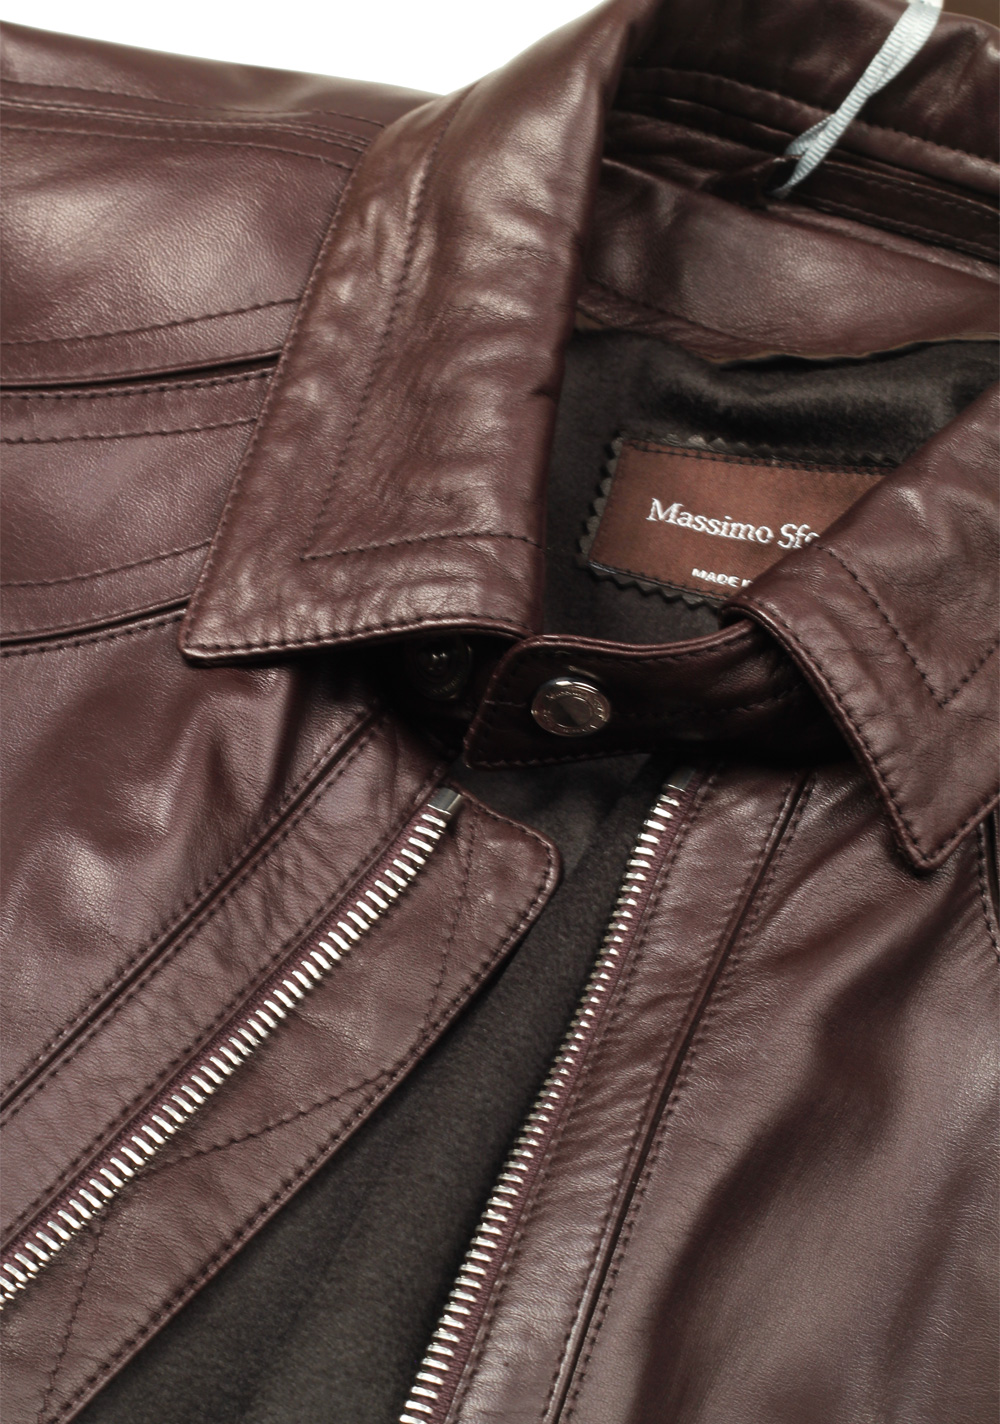 Massimo Sforza Brown Leather Coat Jacket Size 56 / 46R U.S. | Costume Limité